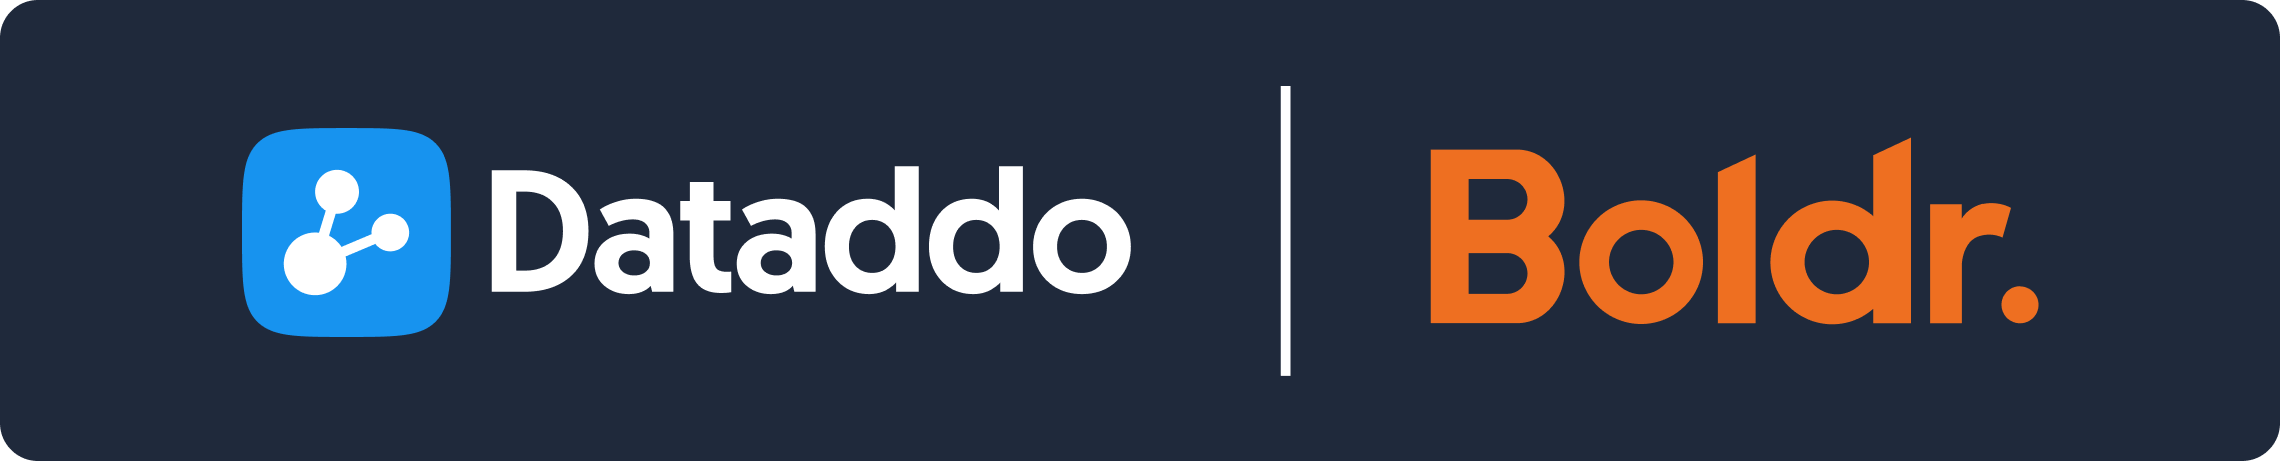 Boldr integrates data with Dataddo